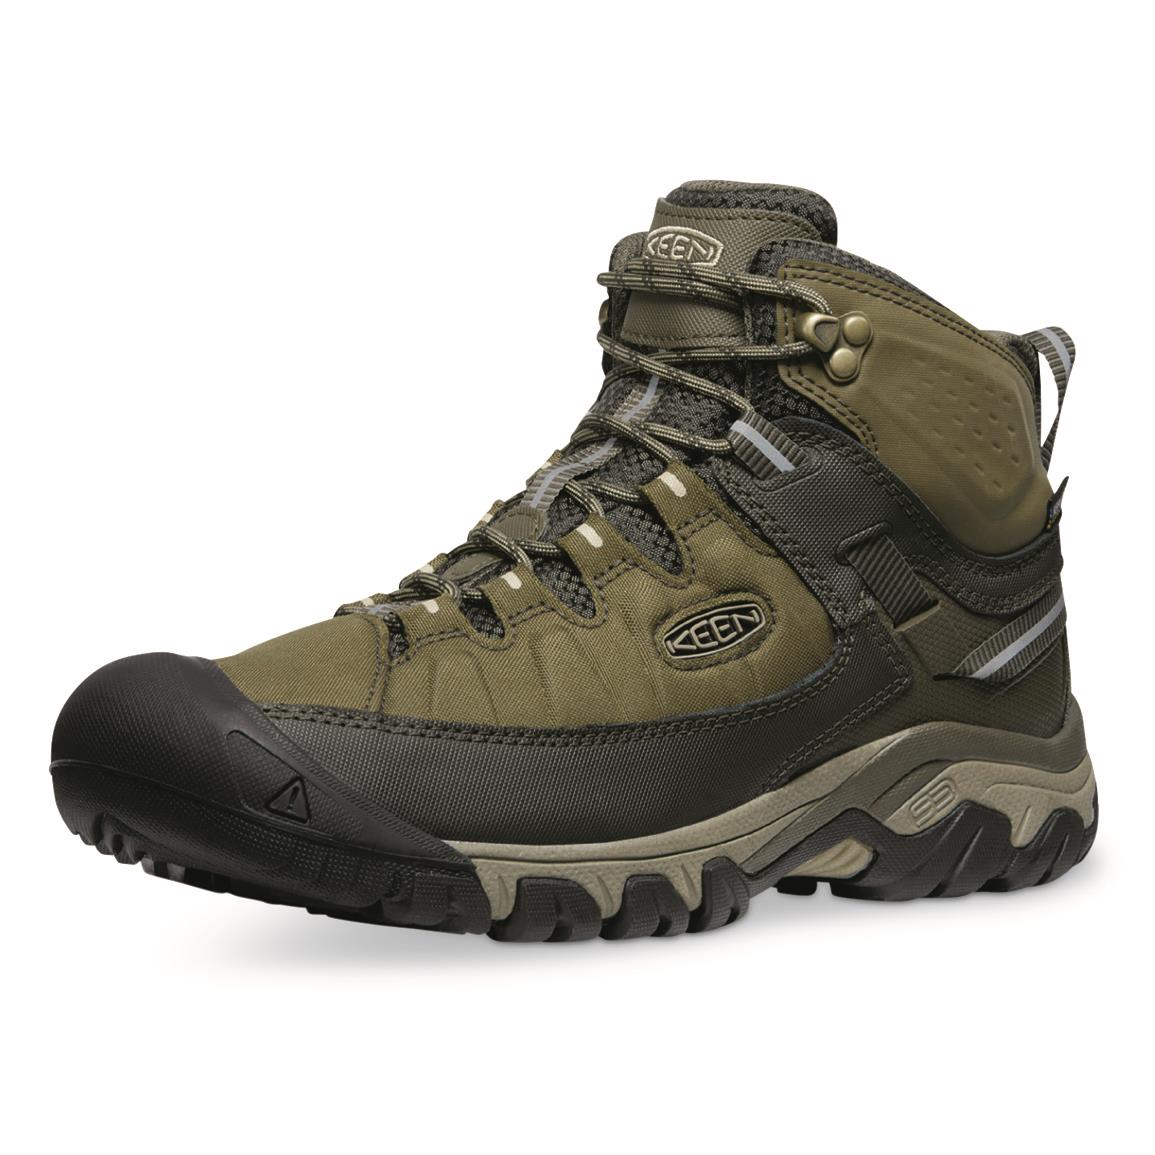 KEEN Men's Targhee EXP Mid Waterproof Hiking Boots, Dark Olive/plaza Taupe